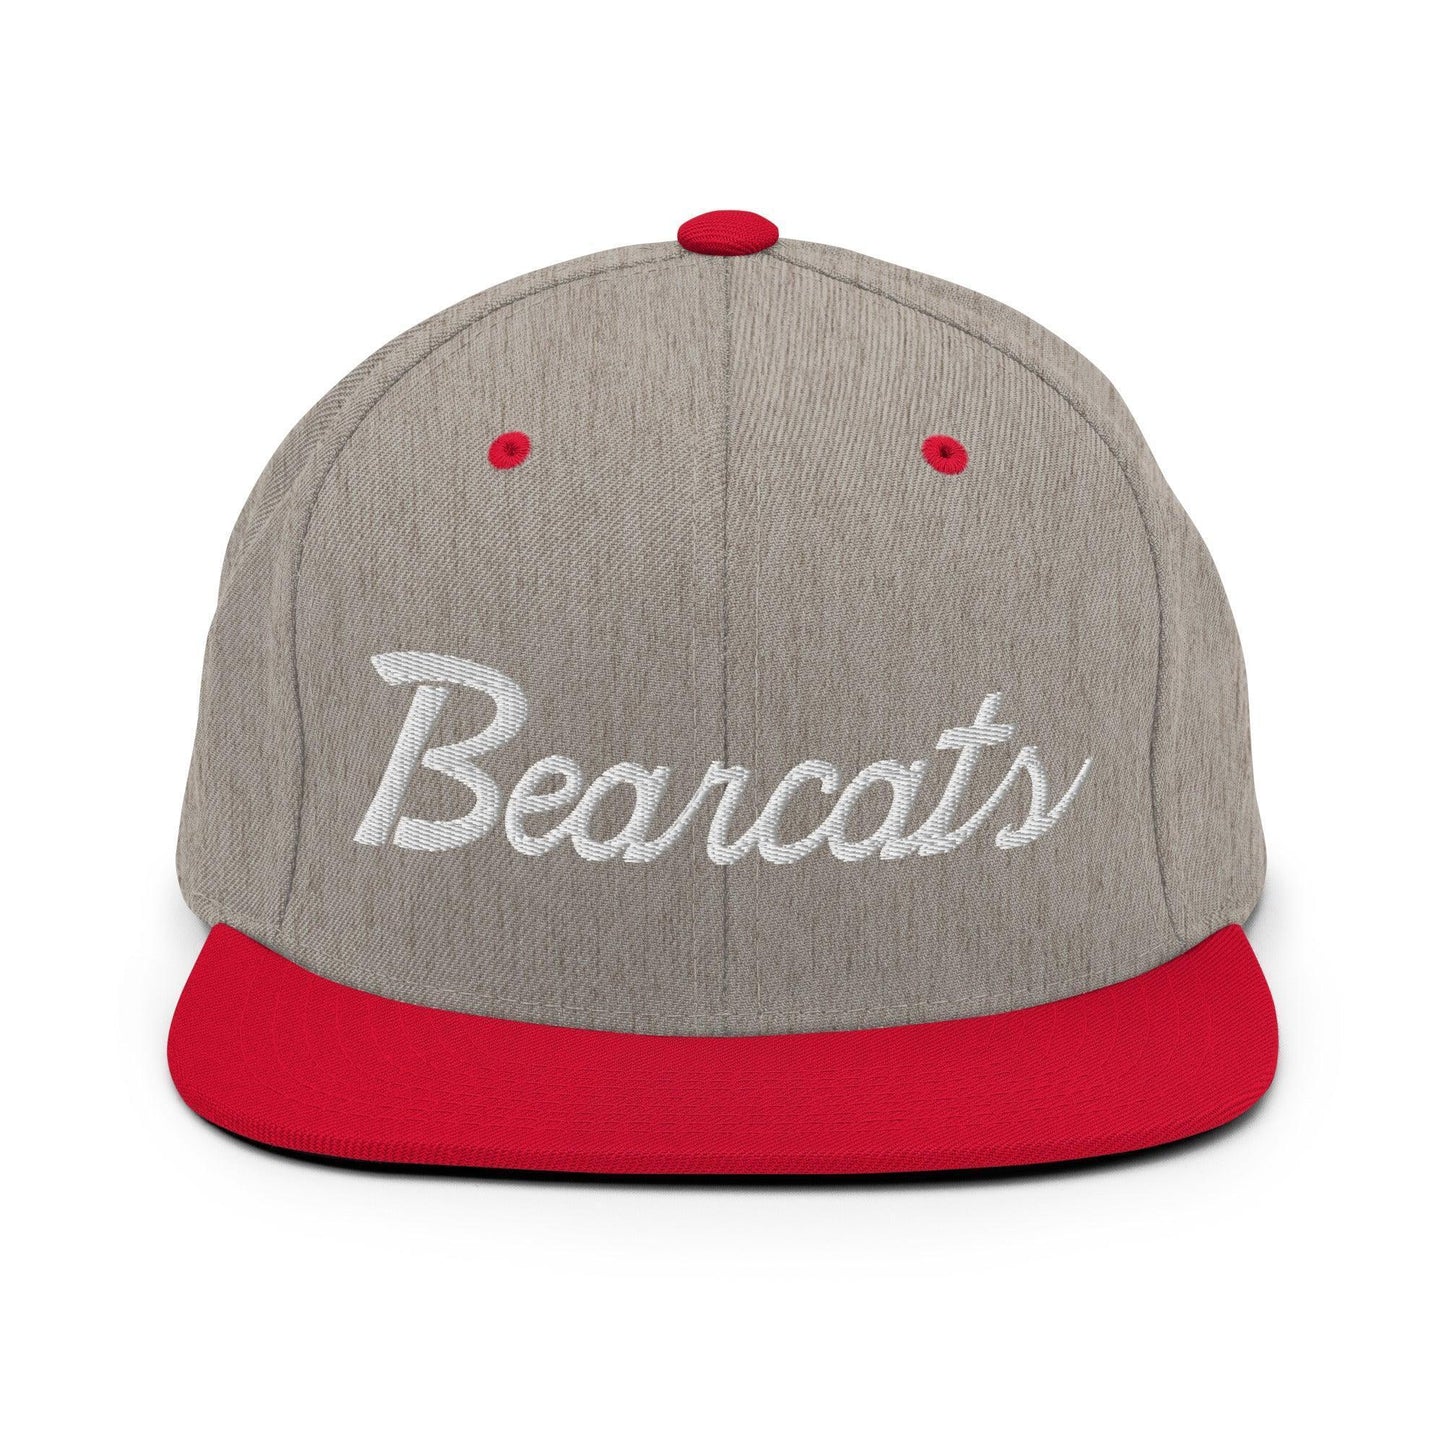 Bearcats School Mascot Script Snapback Hat Heather Grey/ Red